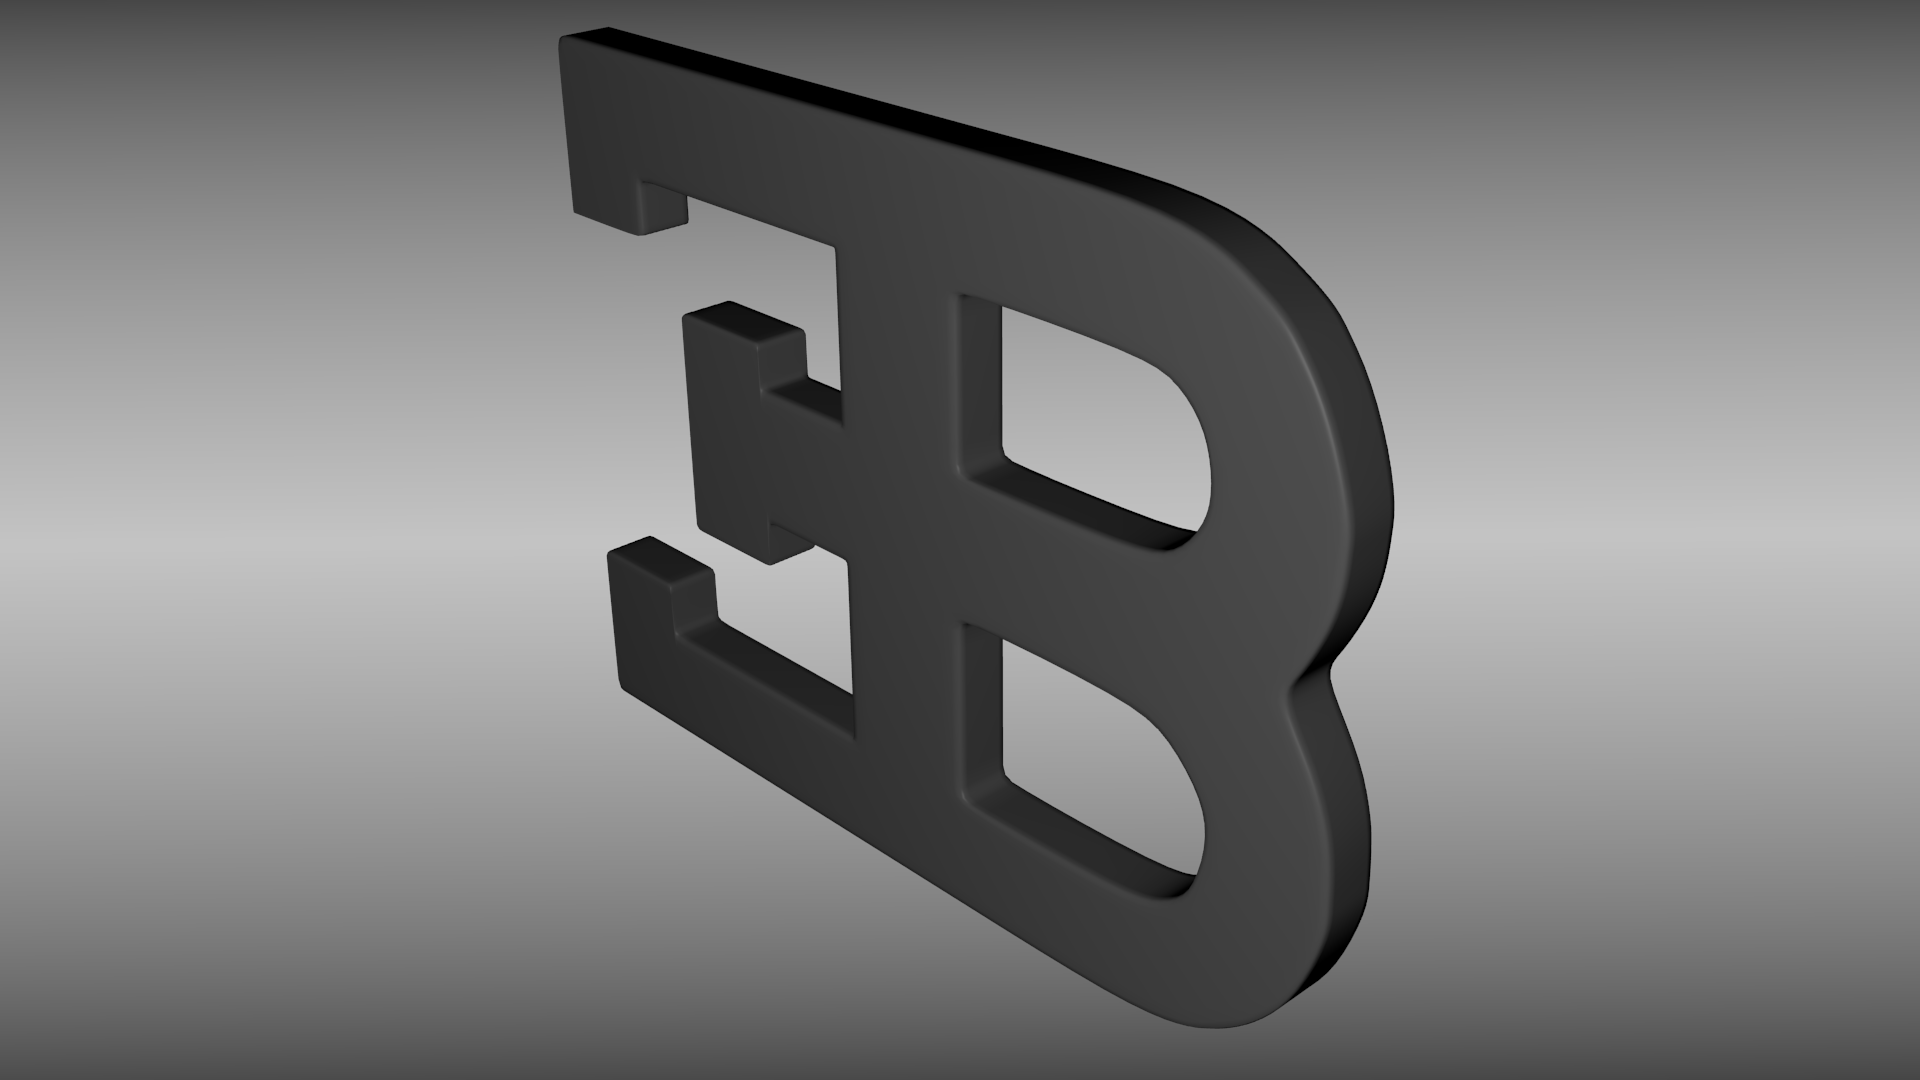 3d bugatti logo wallpapers | Desktop Backgrounds for Free HD ...